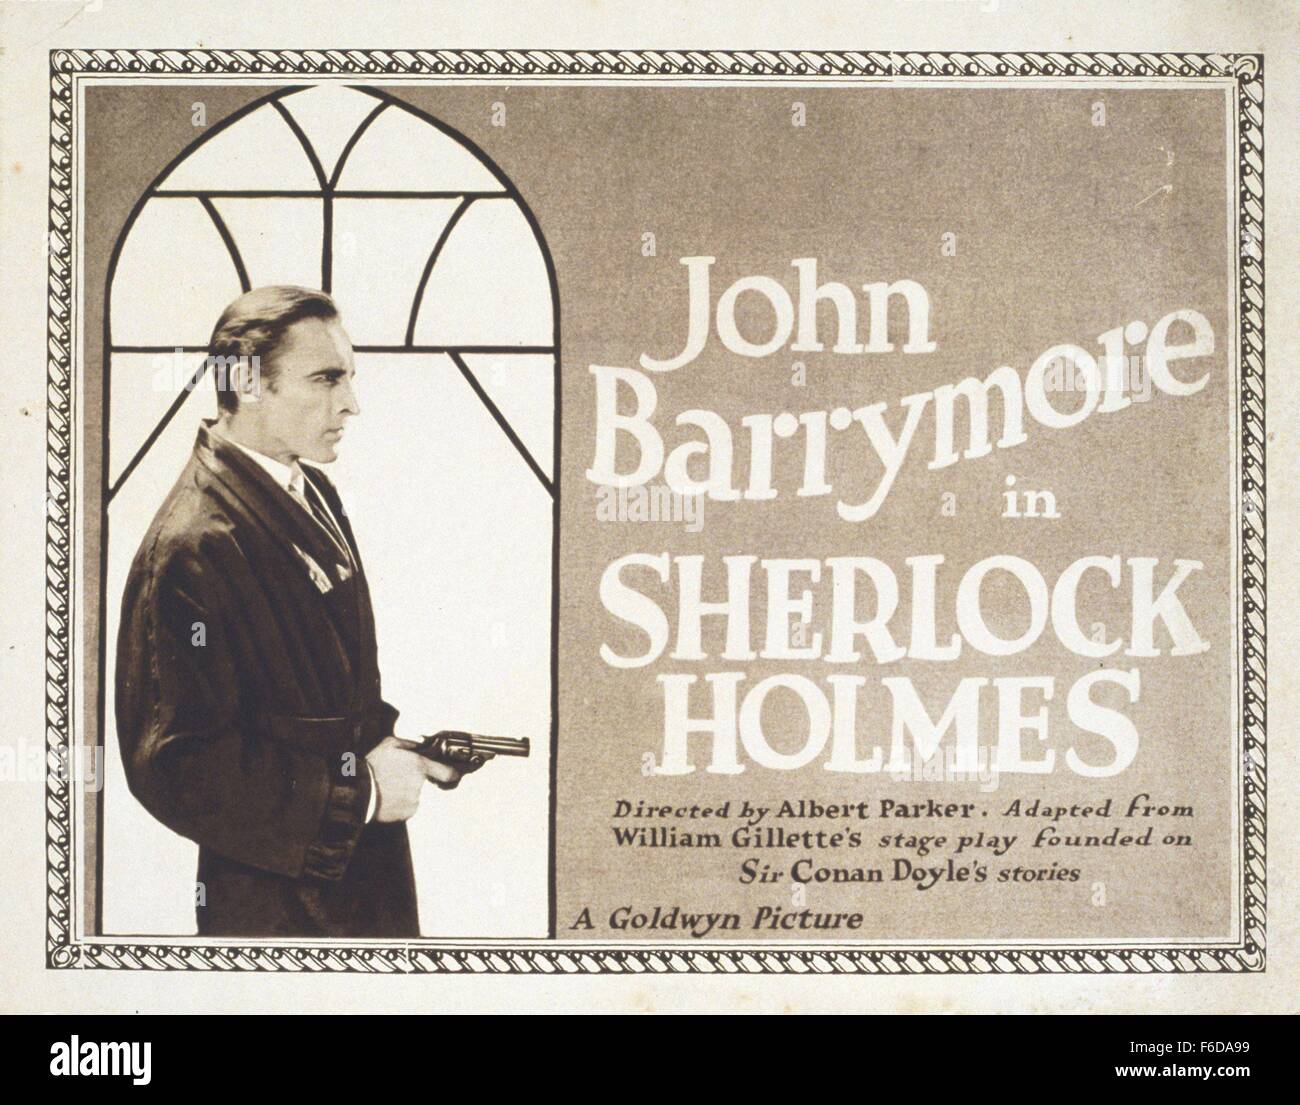 RELEASE DATE: March 7, 1922   MOVIE TITLE: SHERLOCK HOLMES   STUDIO: Goldwyn Pictures Corporation   PLOT: Unknown   PICTURED: JOHN BARRYMORE as ALBERT PARKER. Stock Photo